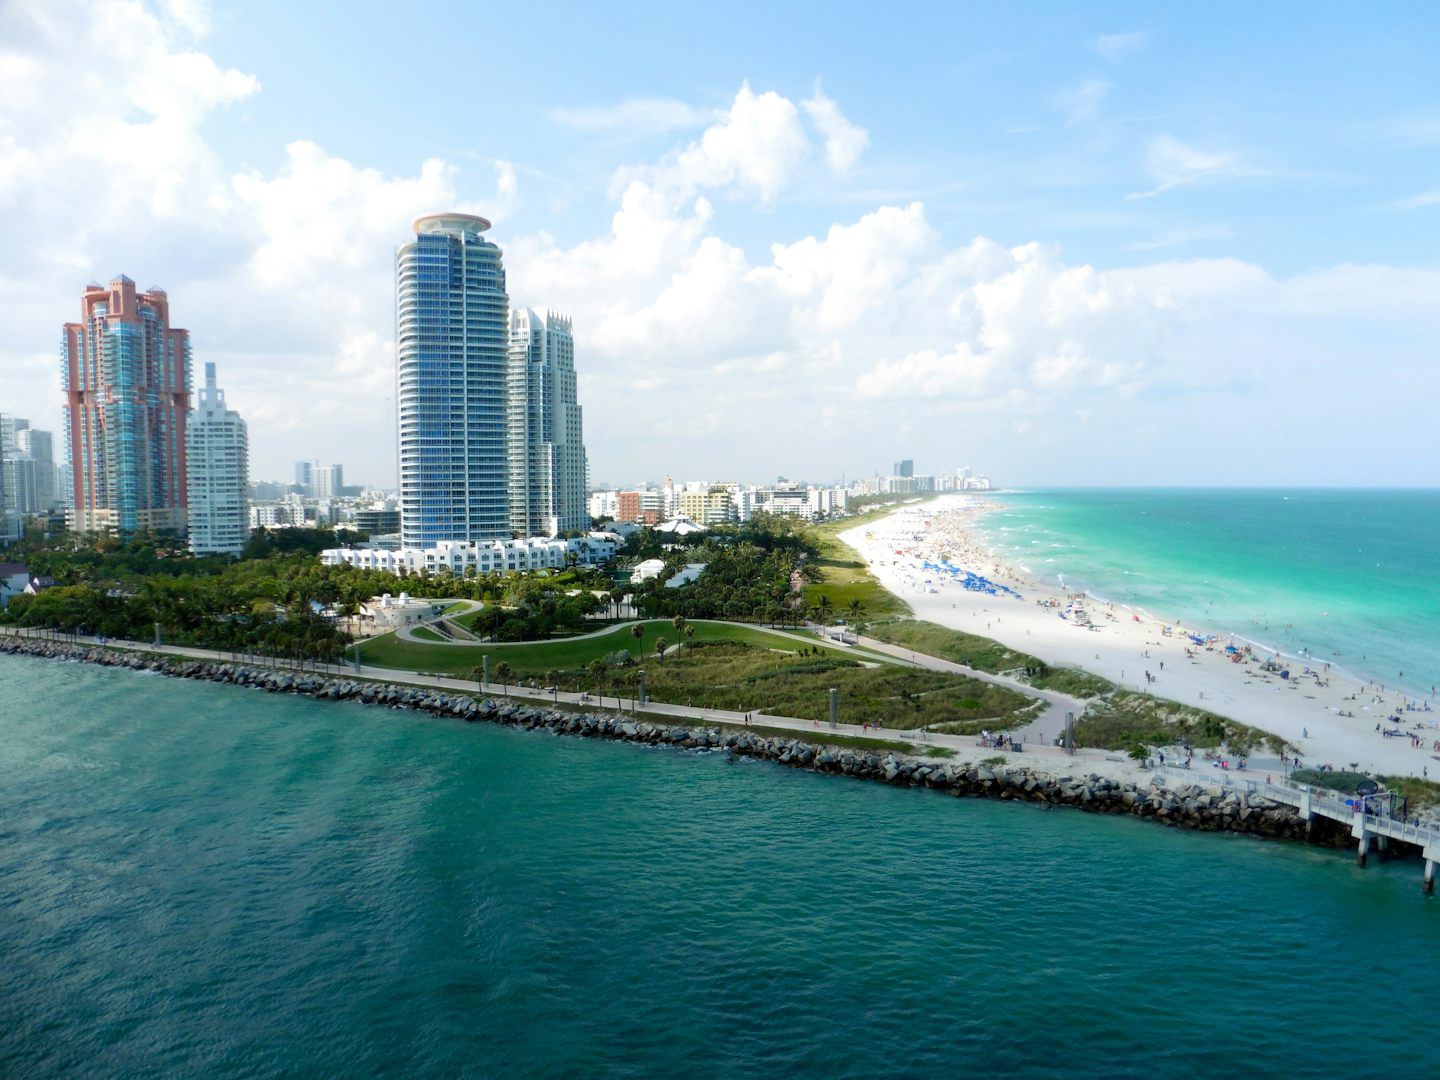 Leaving Miami - views of South Beach